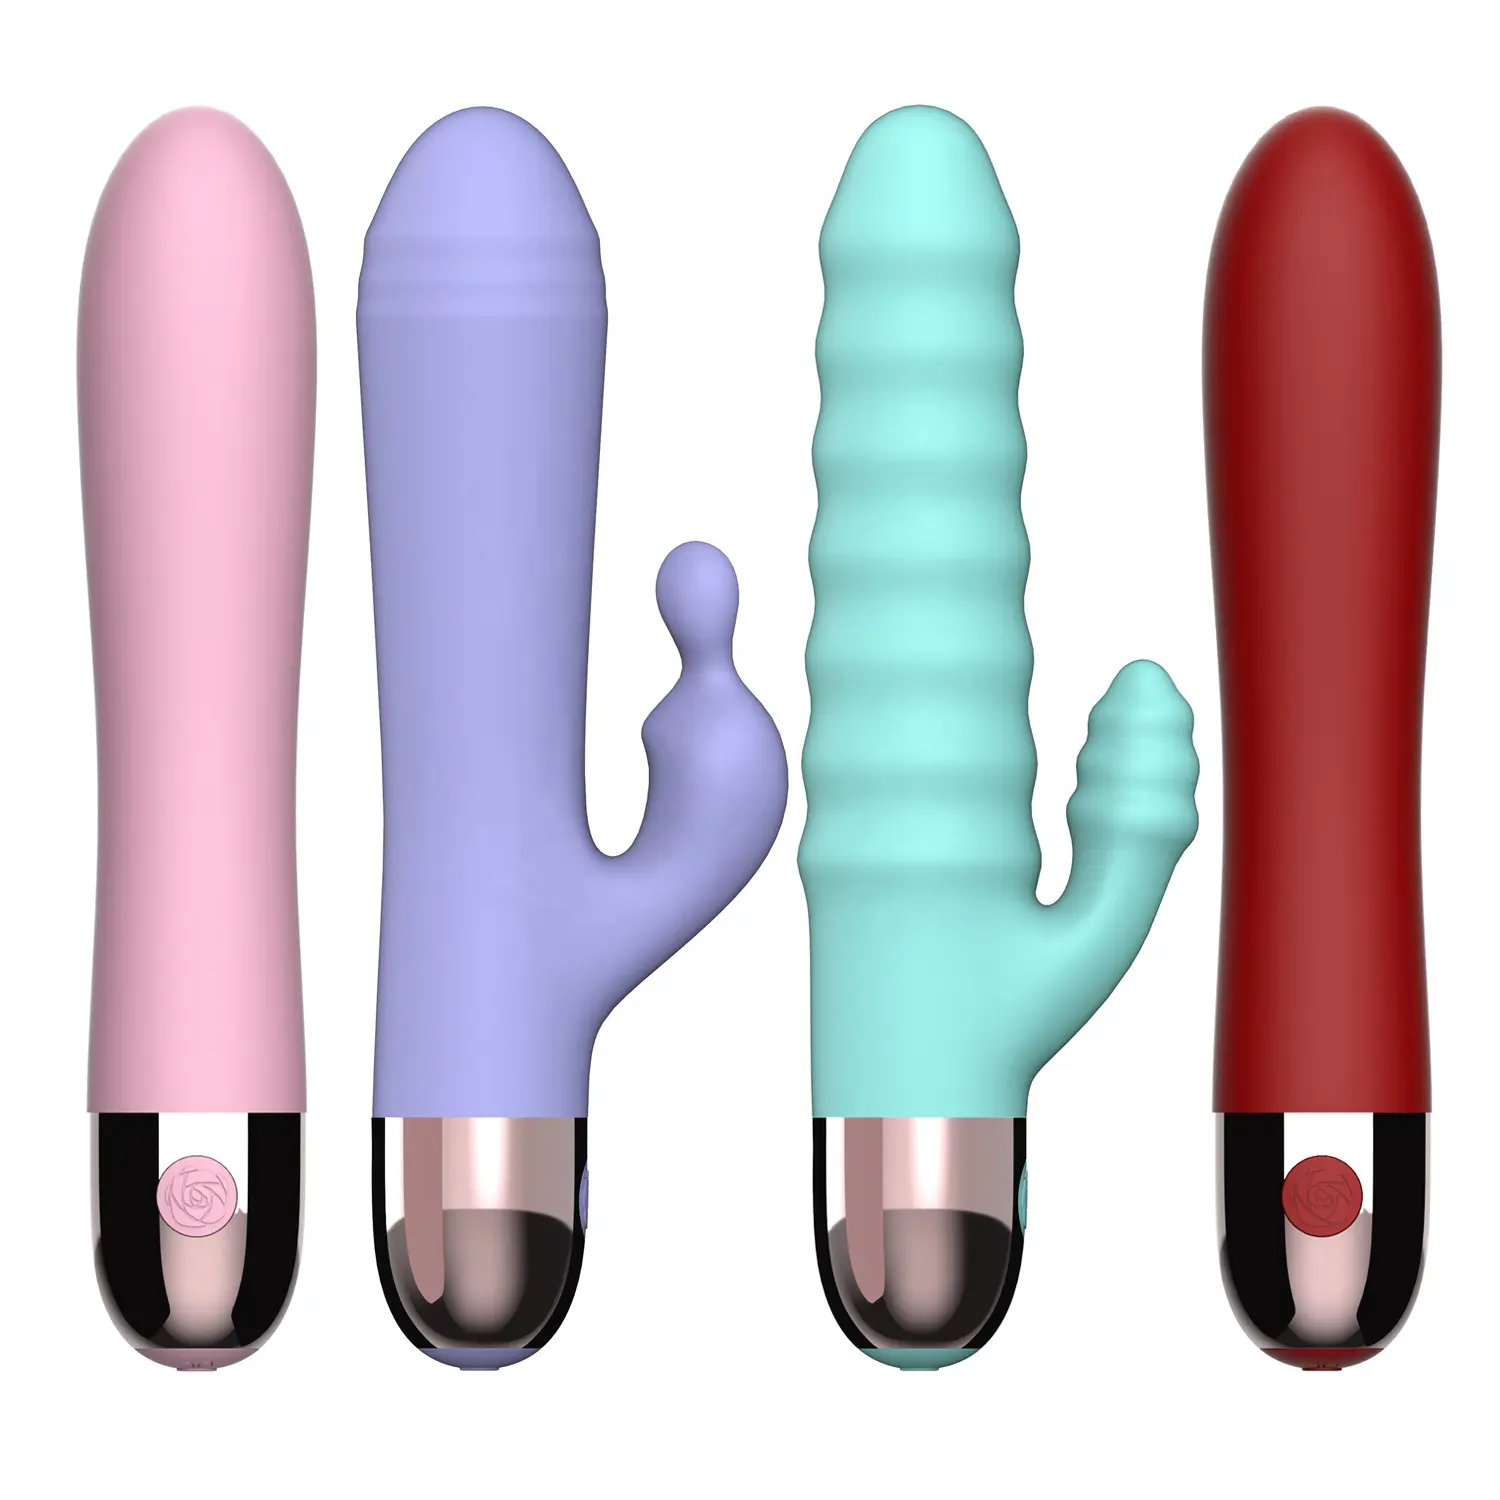 New creative different double motors sex toys adult massager rabbit vibrator